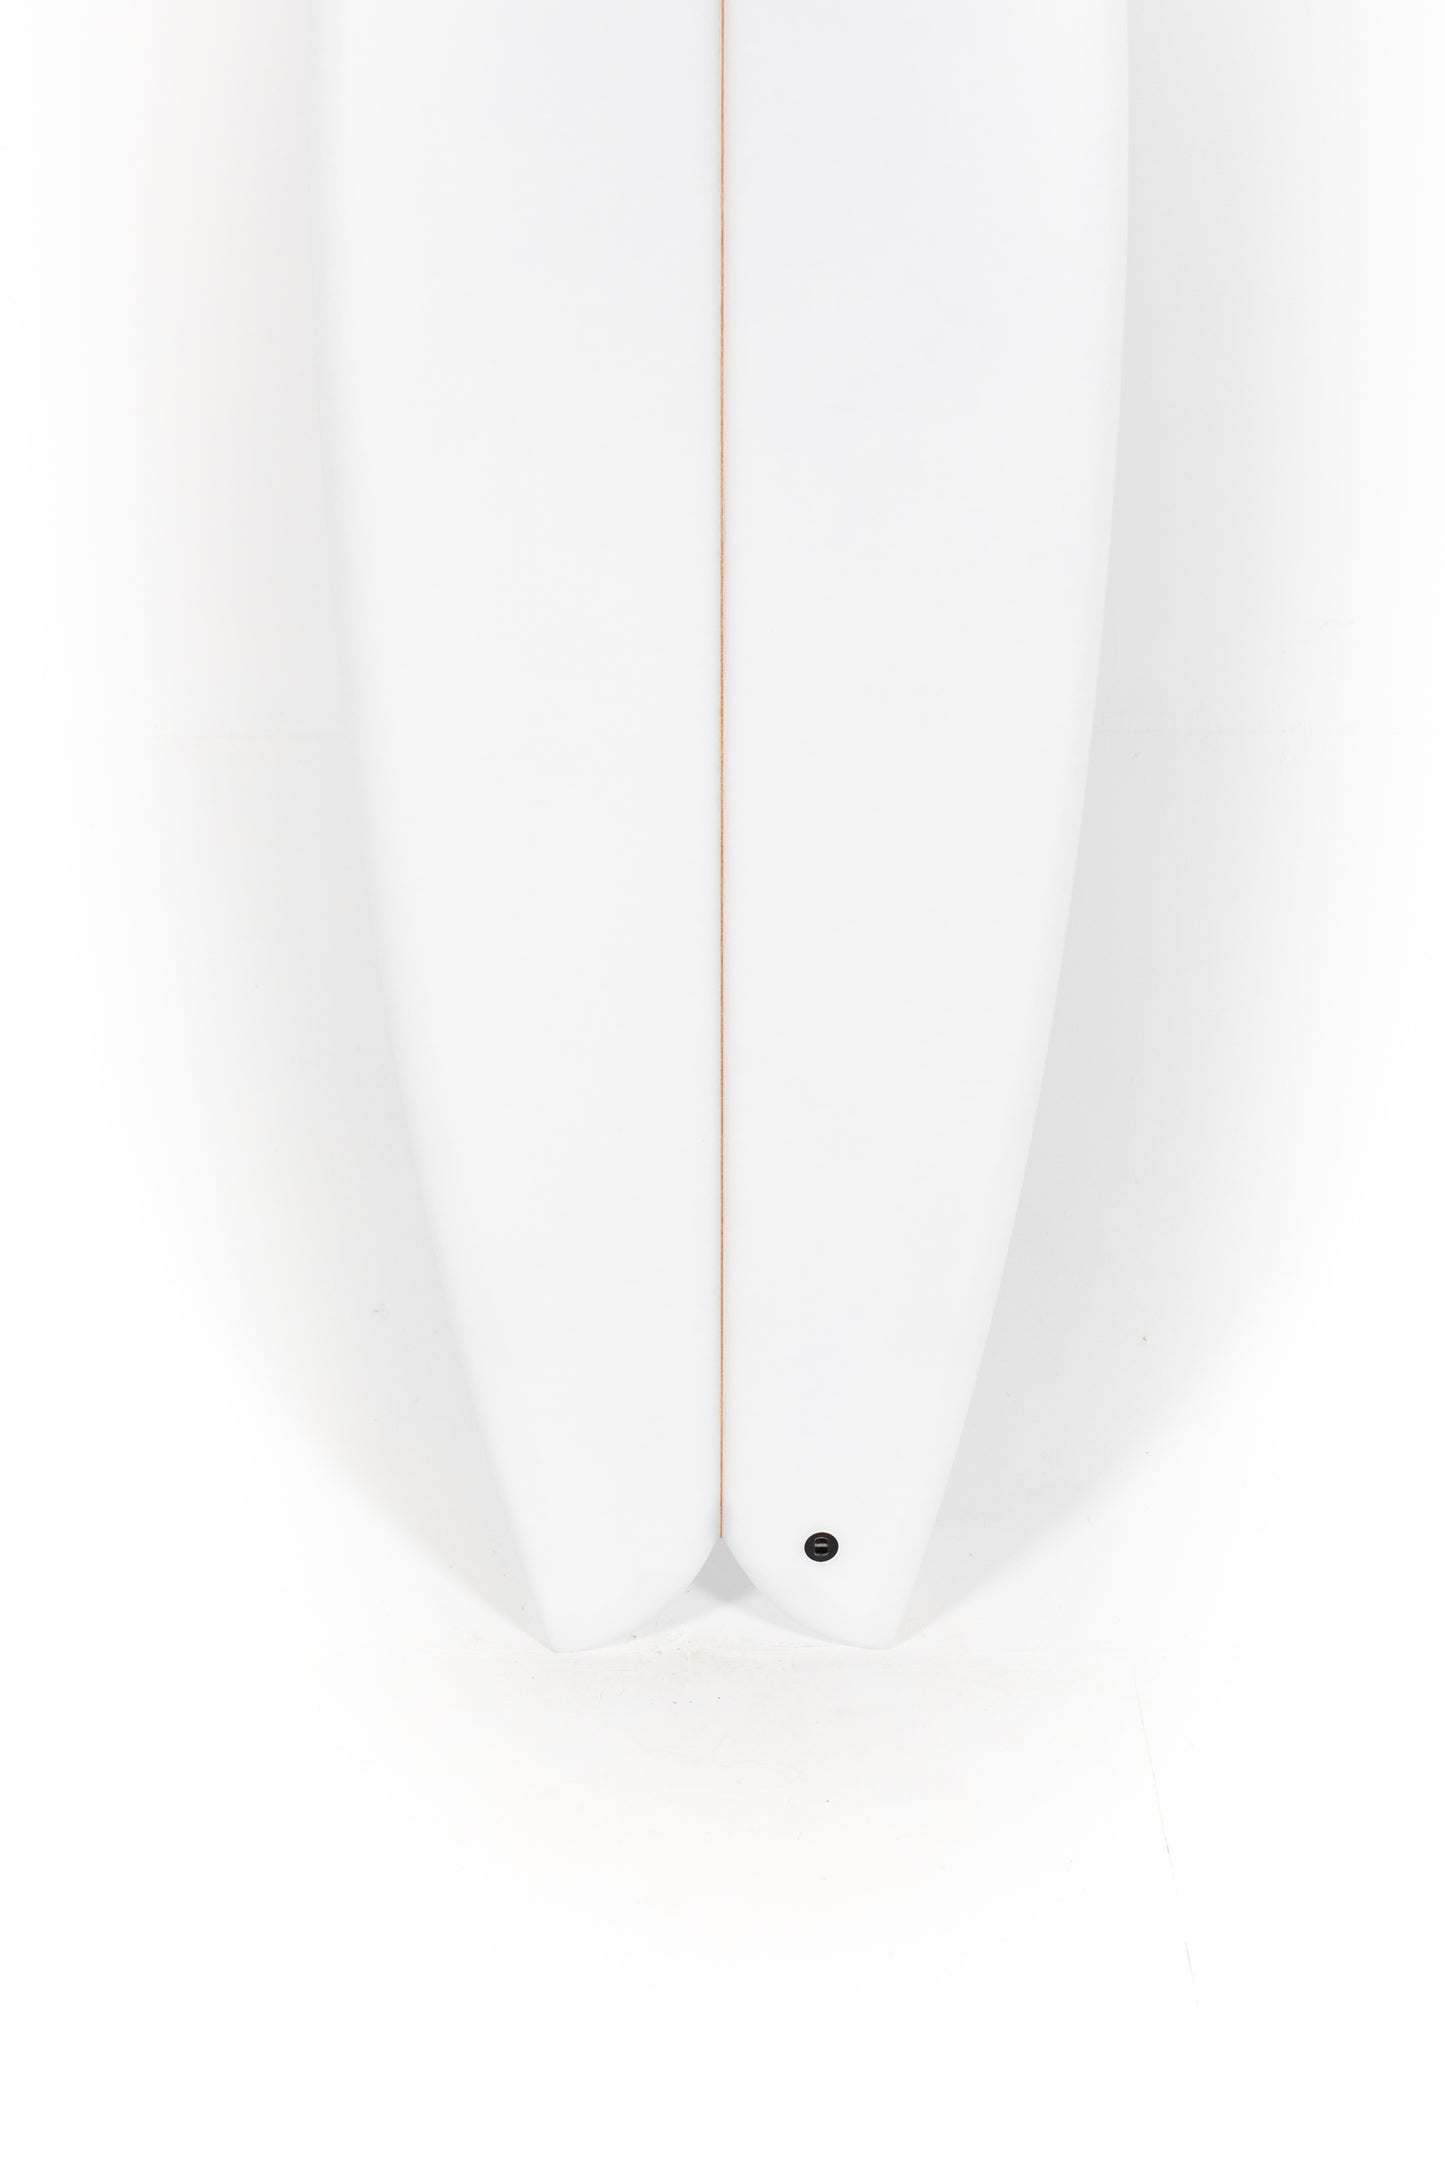 
                  
                    Pukas Surf Shop - Kream Surfboards - FISH - 6'0" - 21 1/2 - 2 5/8 - 38.2L
                  
                